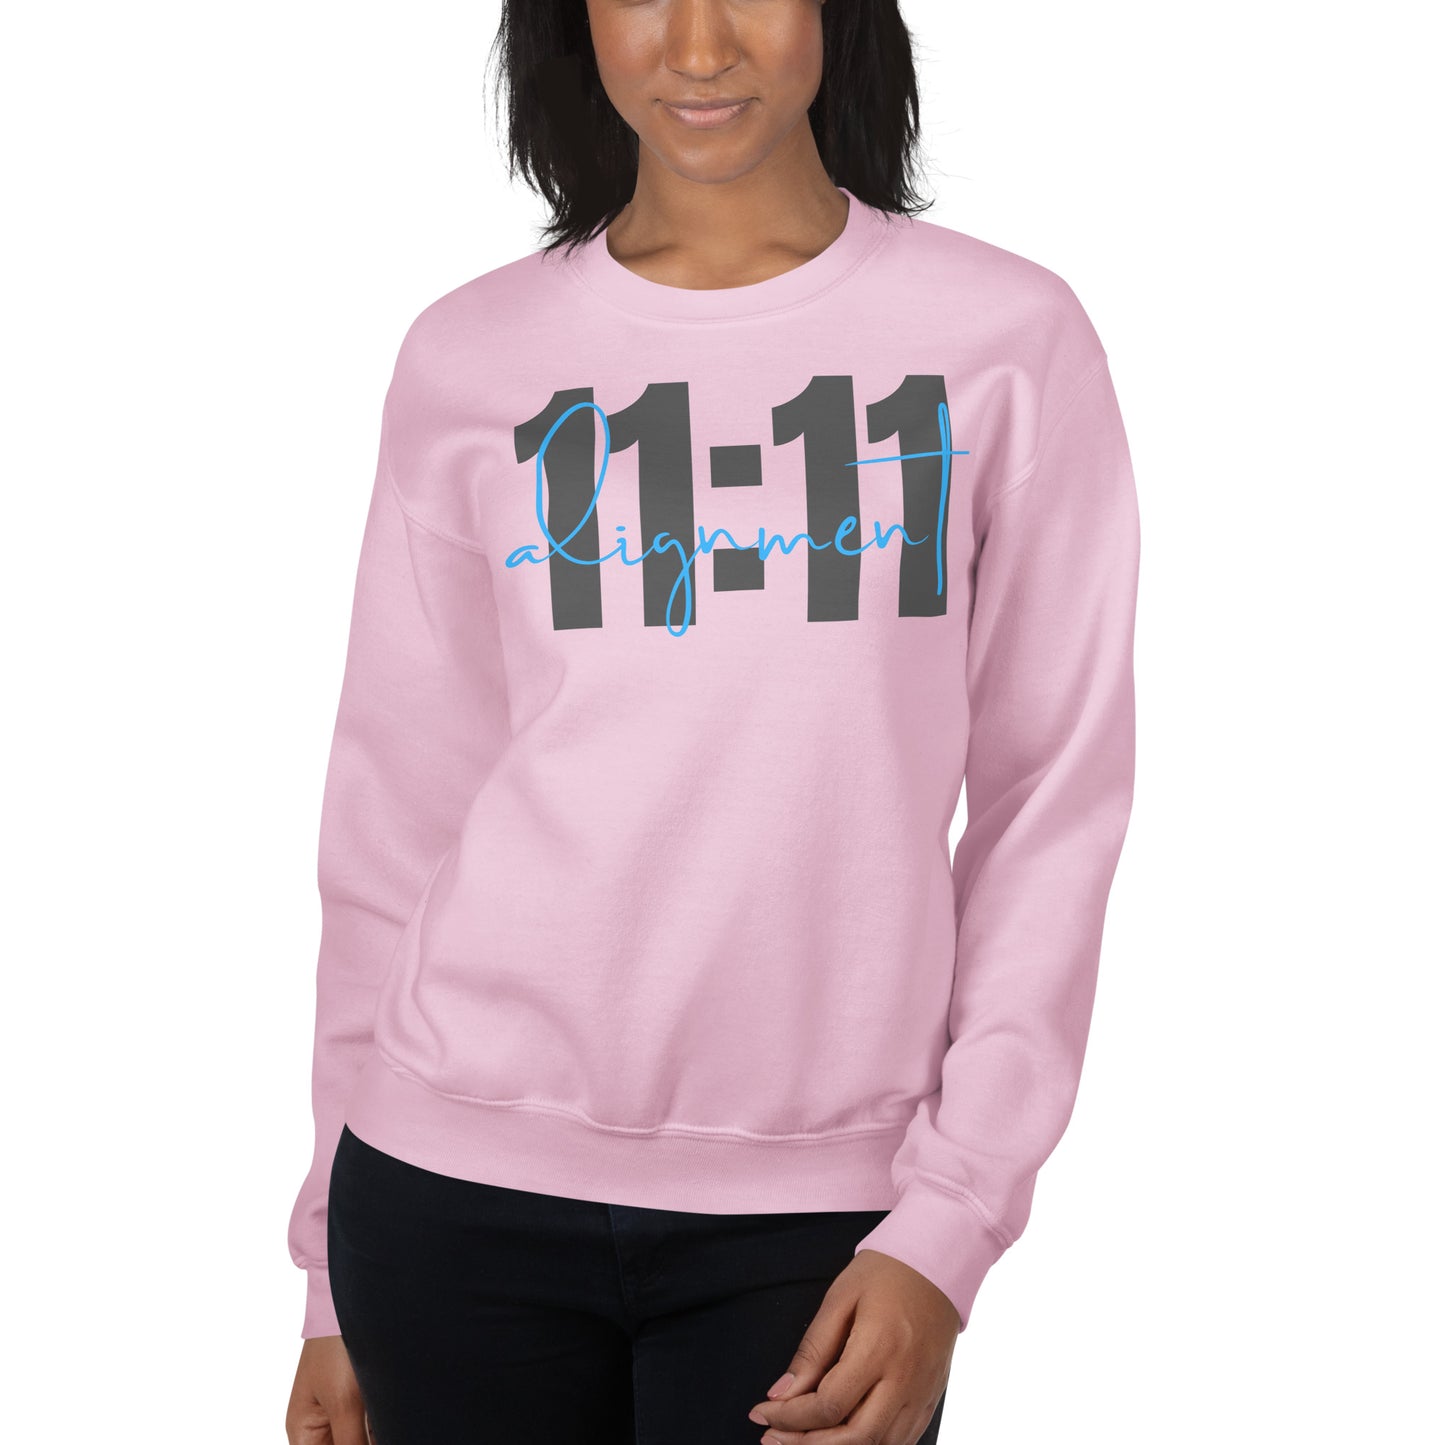 11:11 Alignment Unisex Sweatshirt